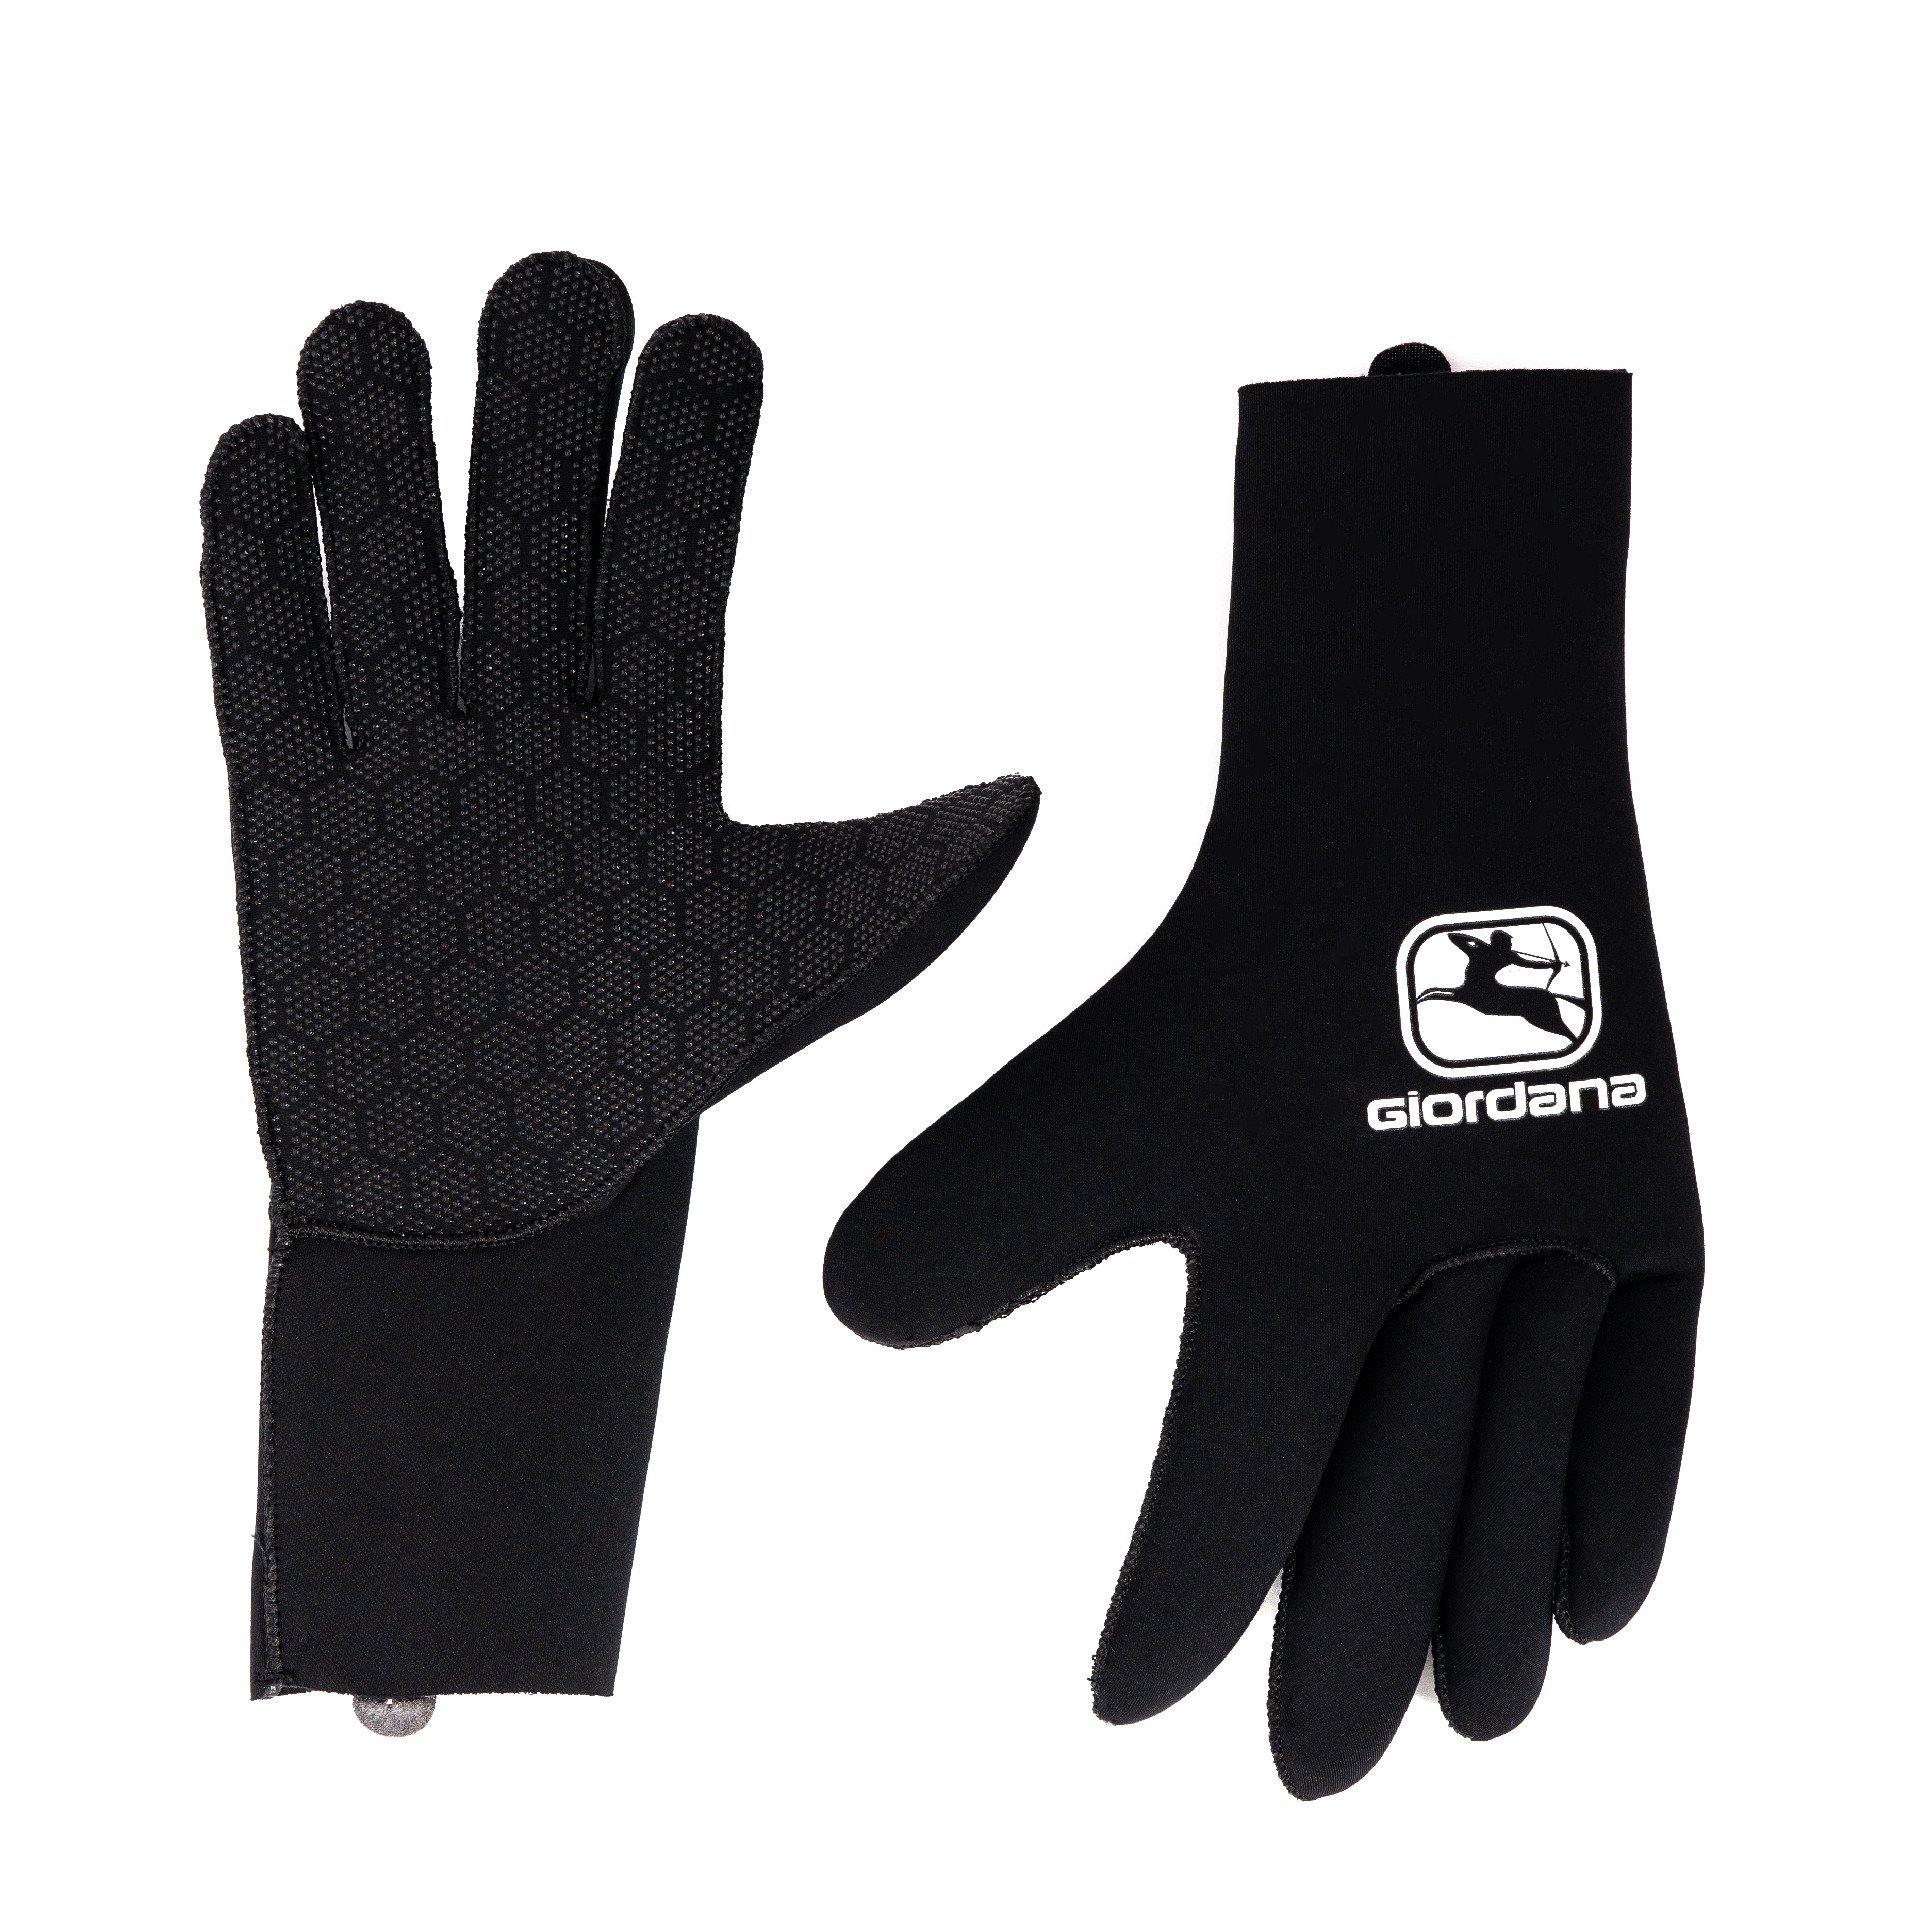 Giordana Cycling - Winter Gloves